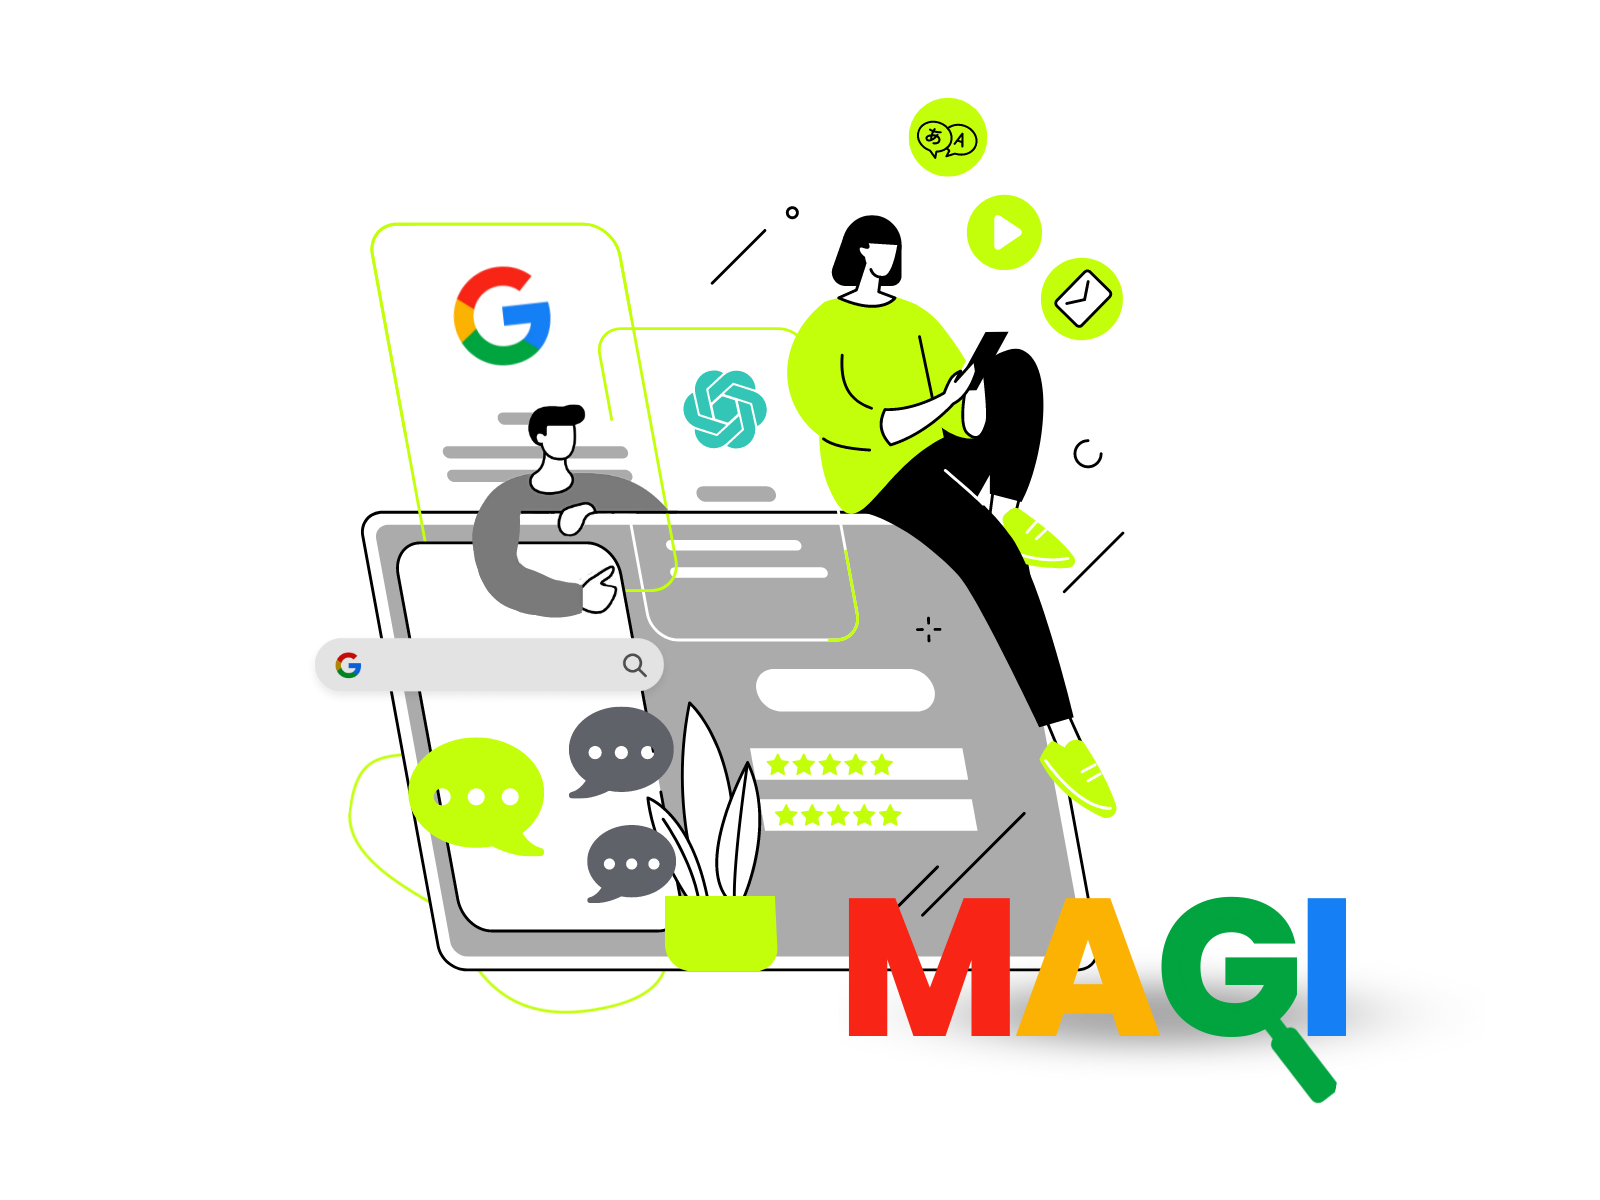 Project Magi: The Latest Google Announcement